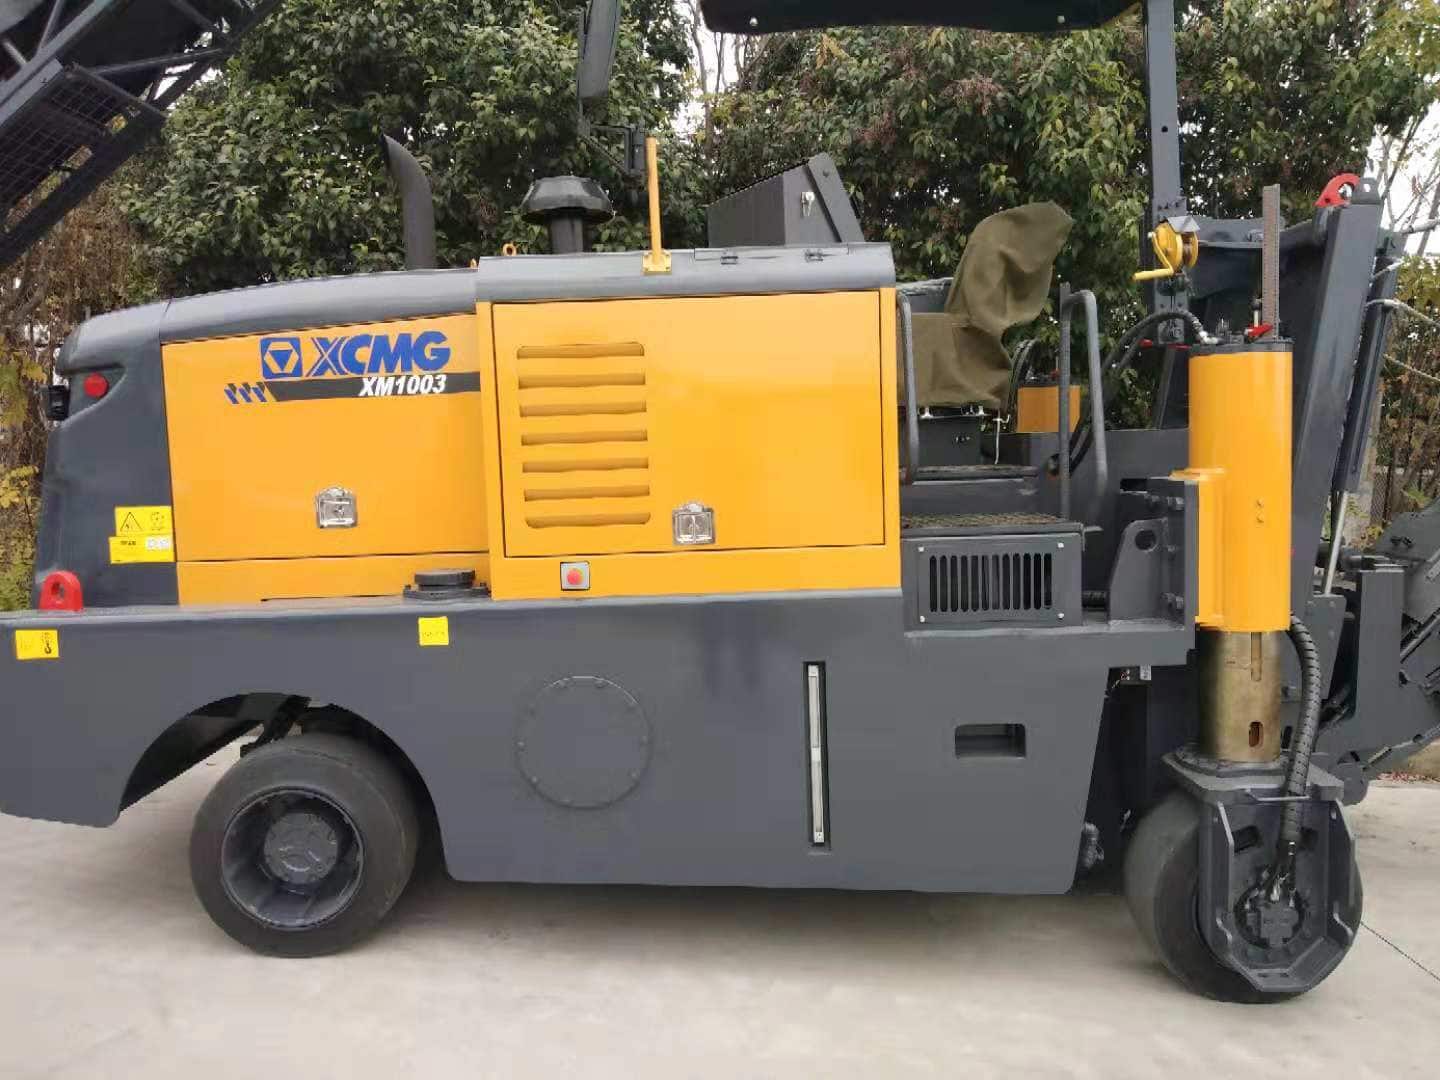 XCMG 1000mm concrete pavement milling machine XM1003 for sale